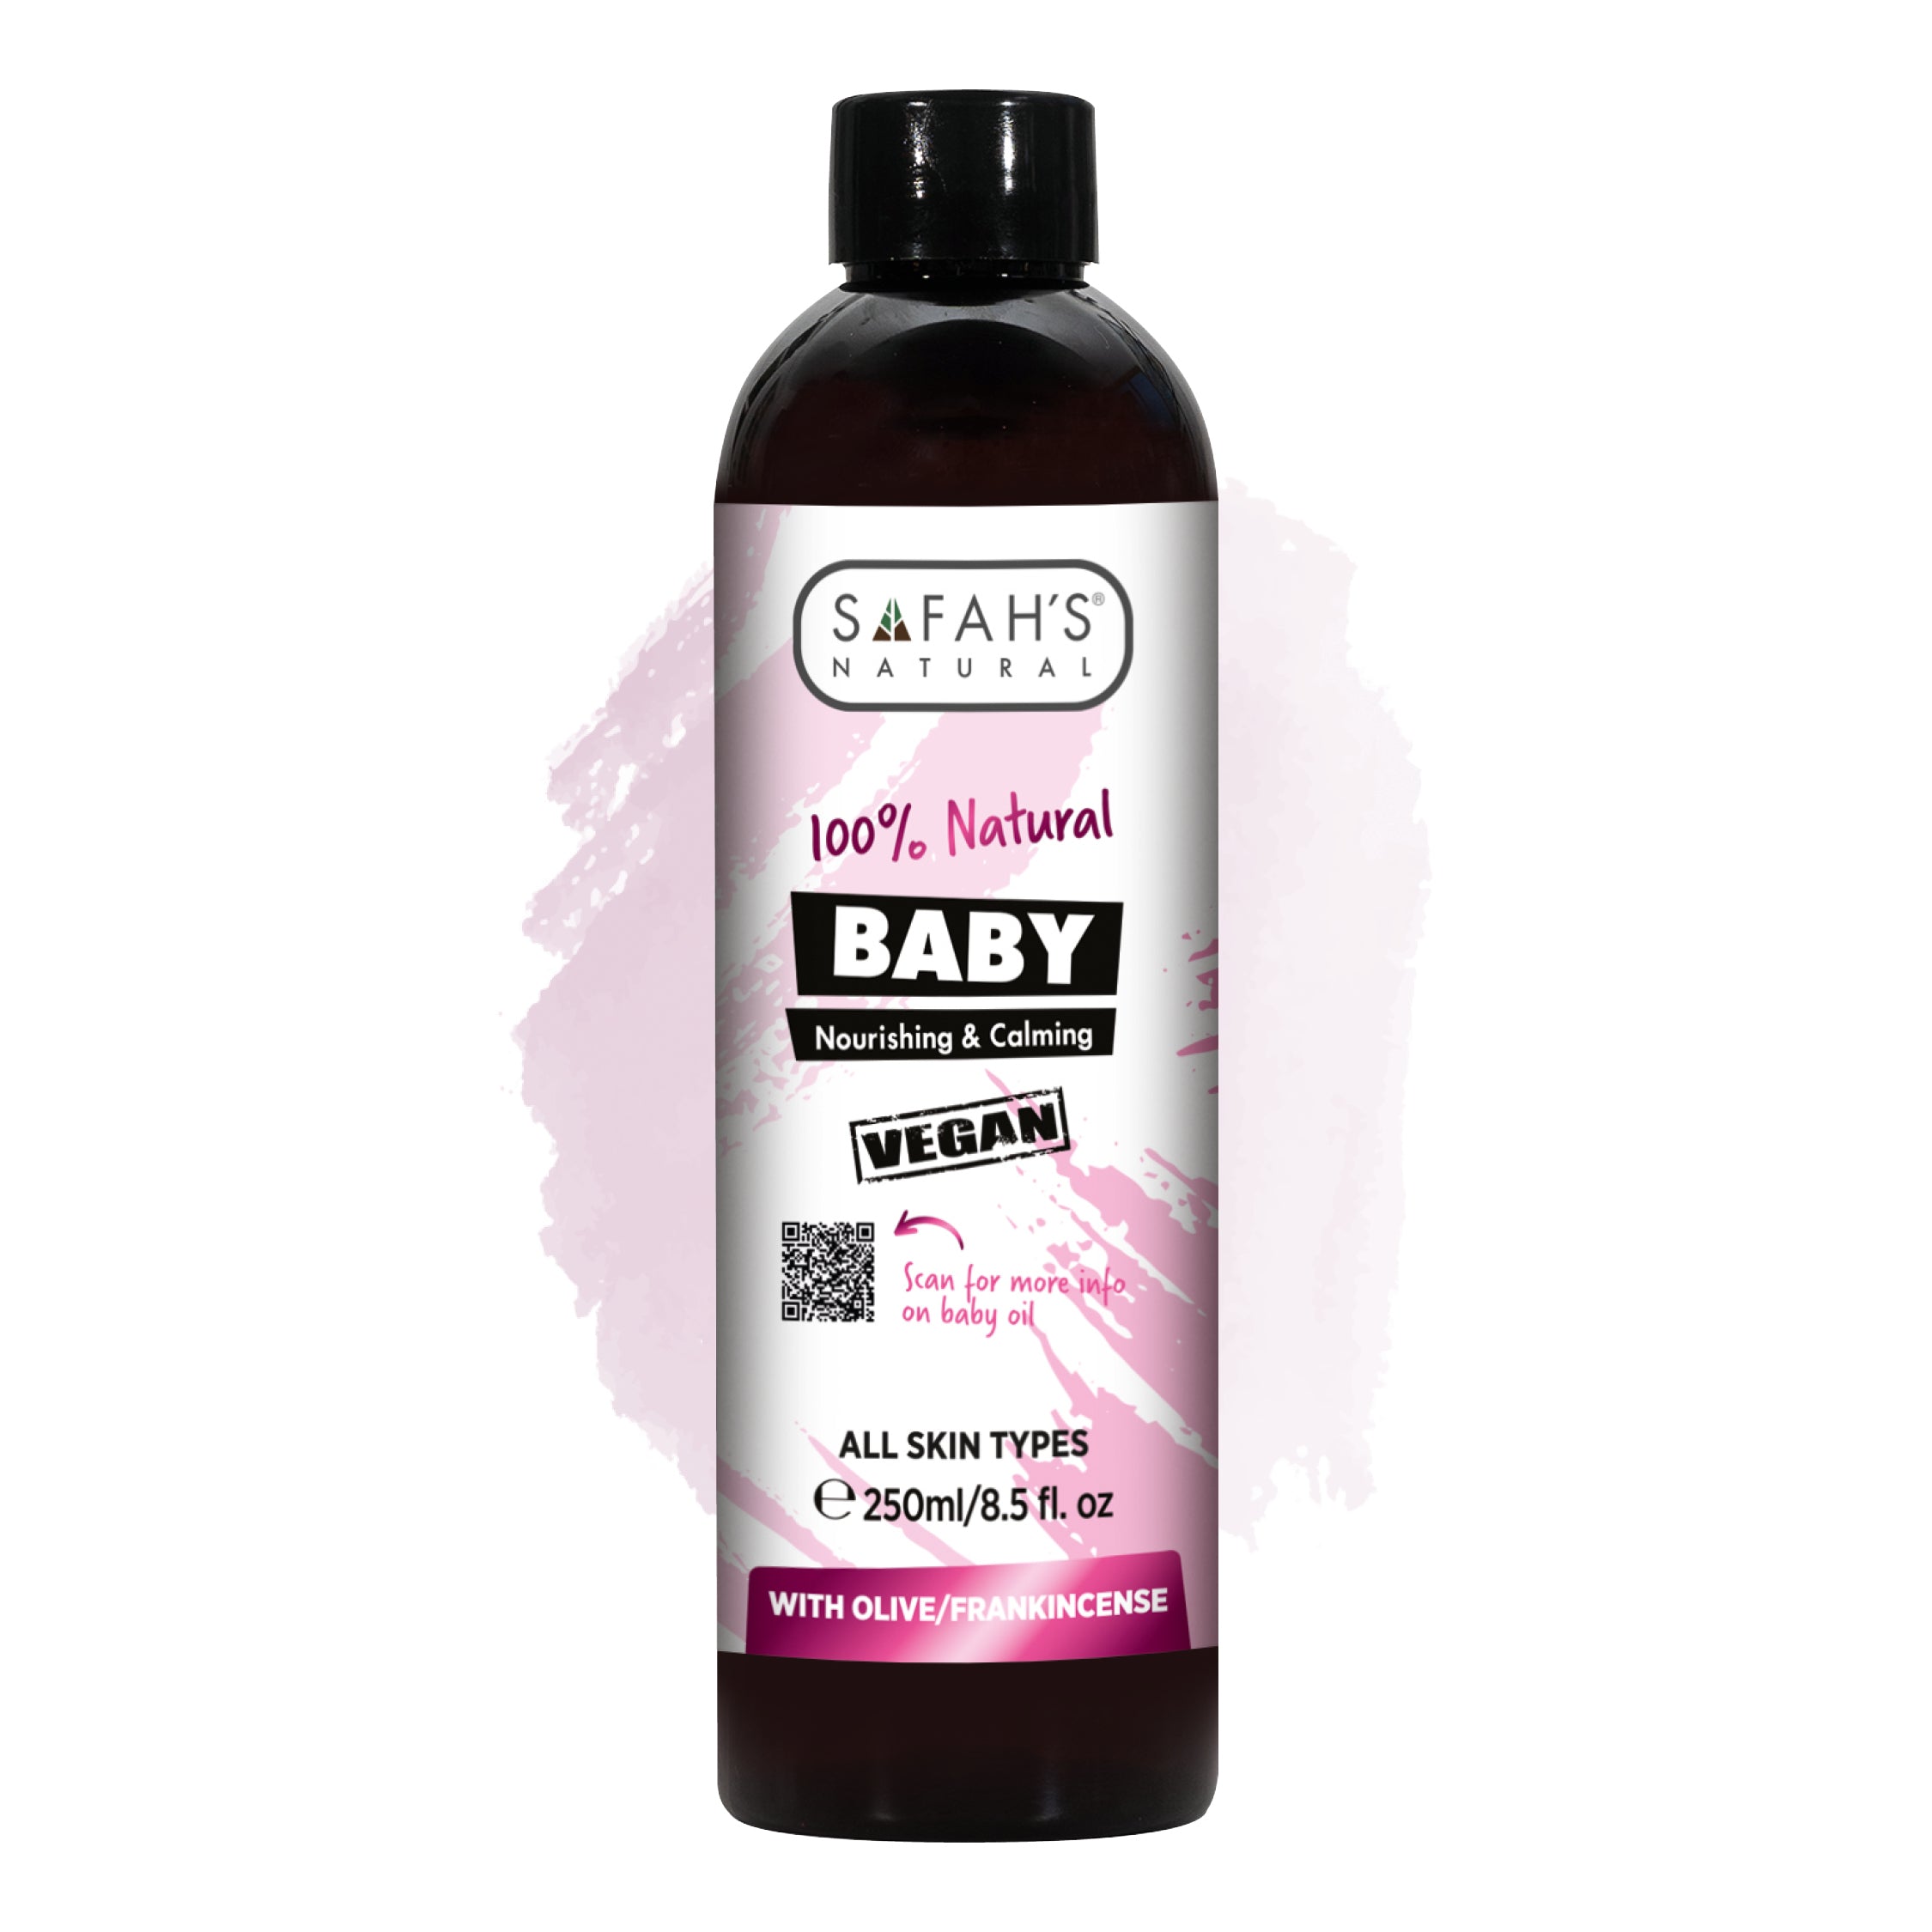 Baby oil